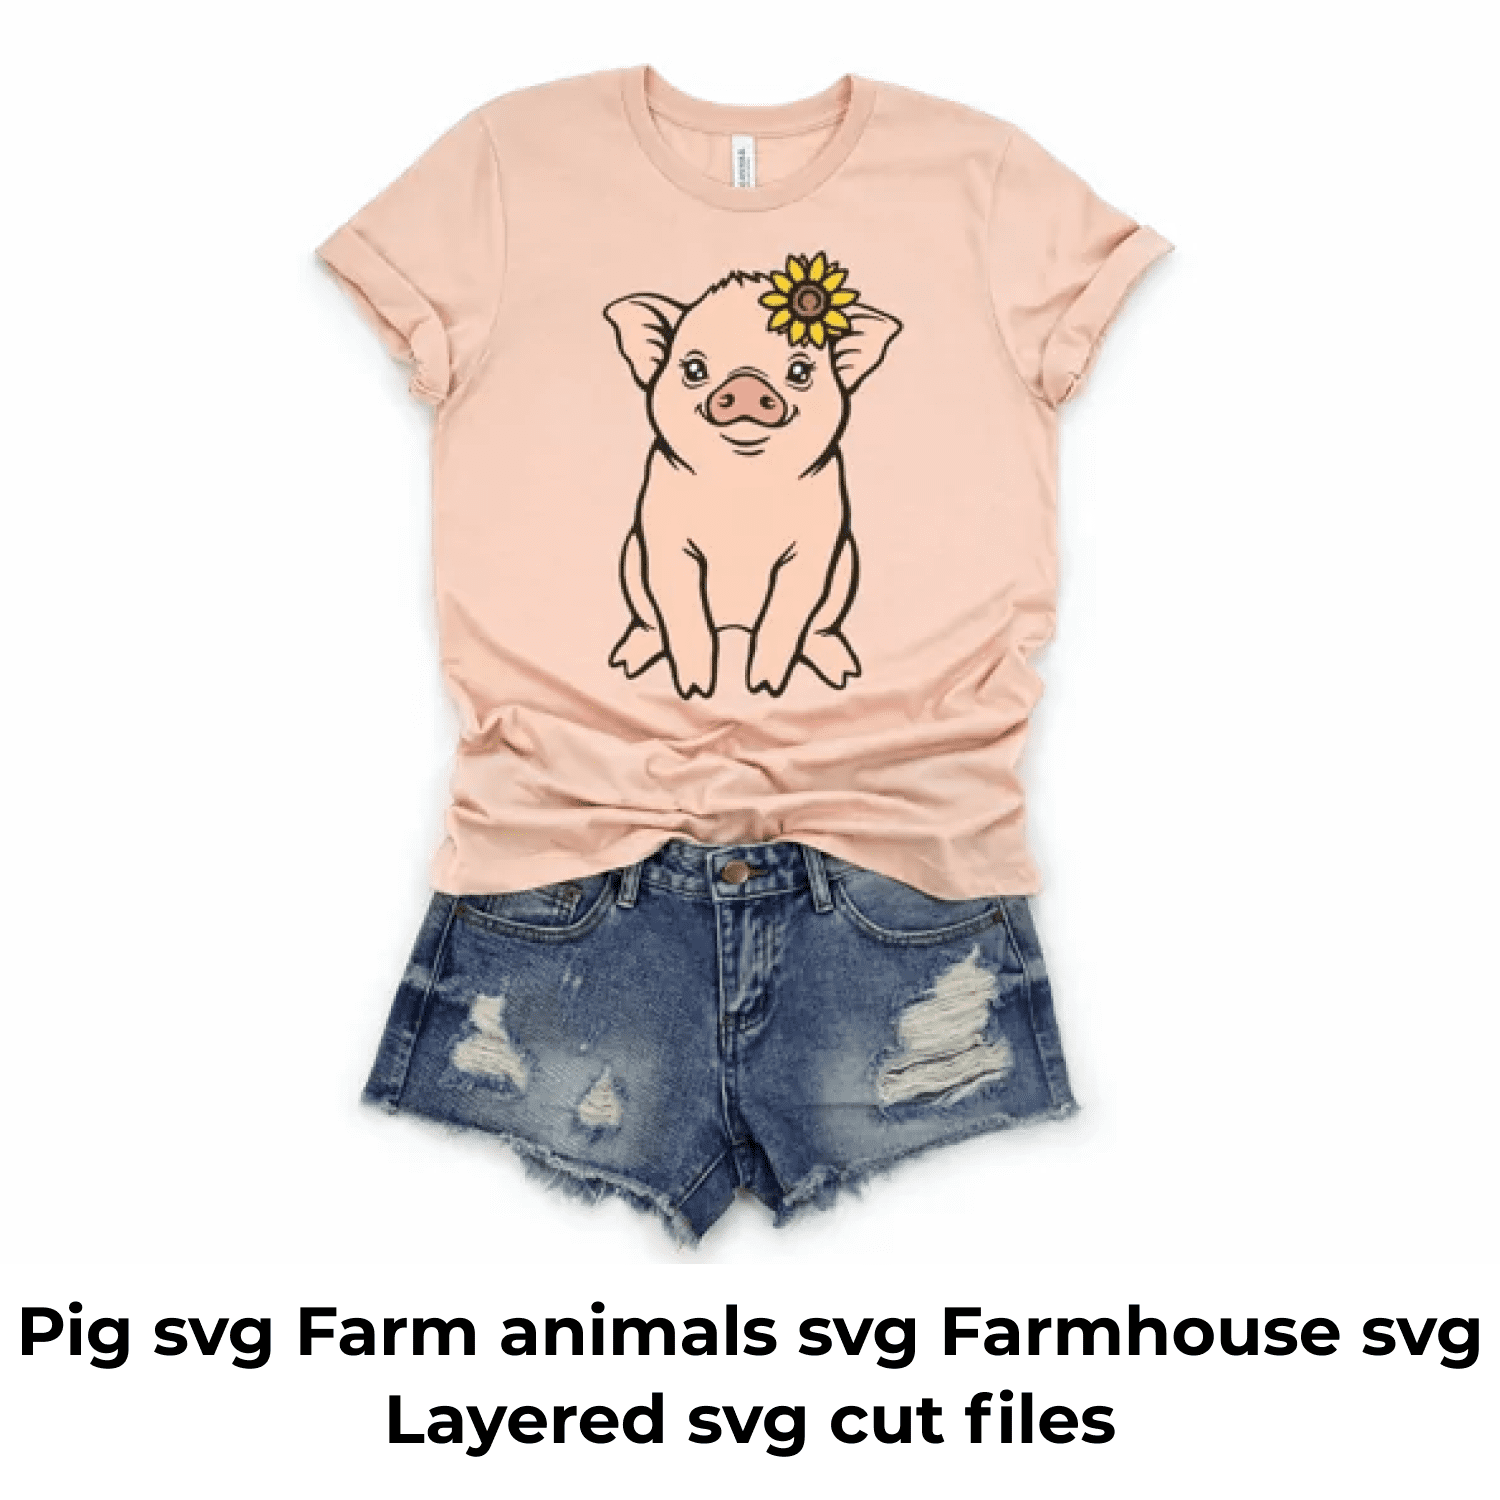 Pig svg Farm animals svg Farmhouse svg Layered svg cut files cover.